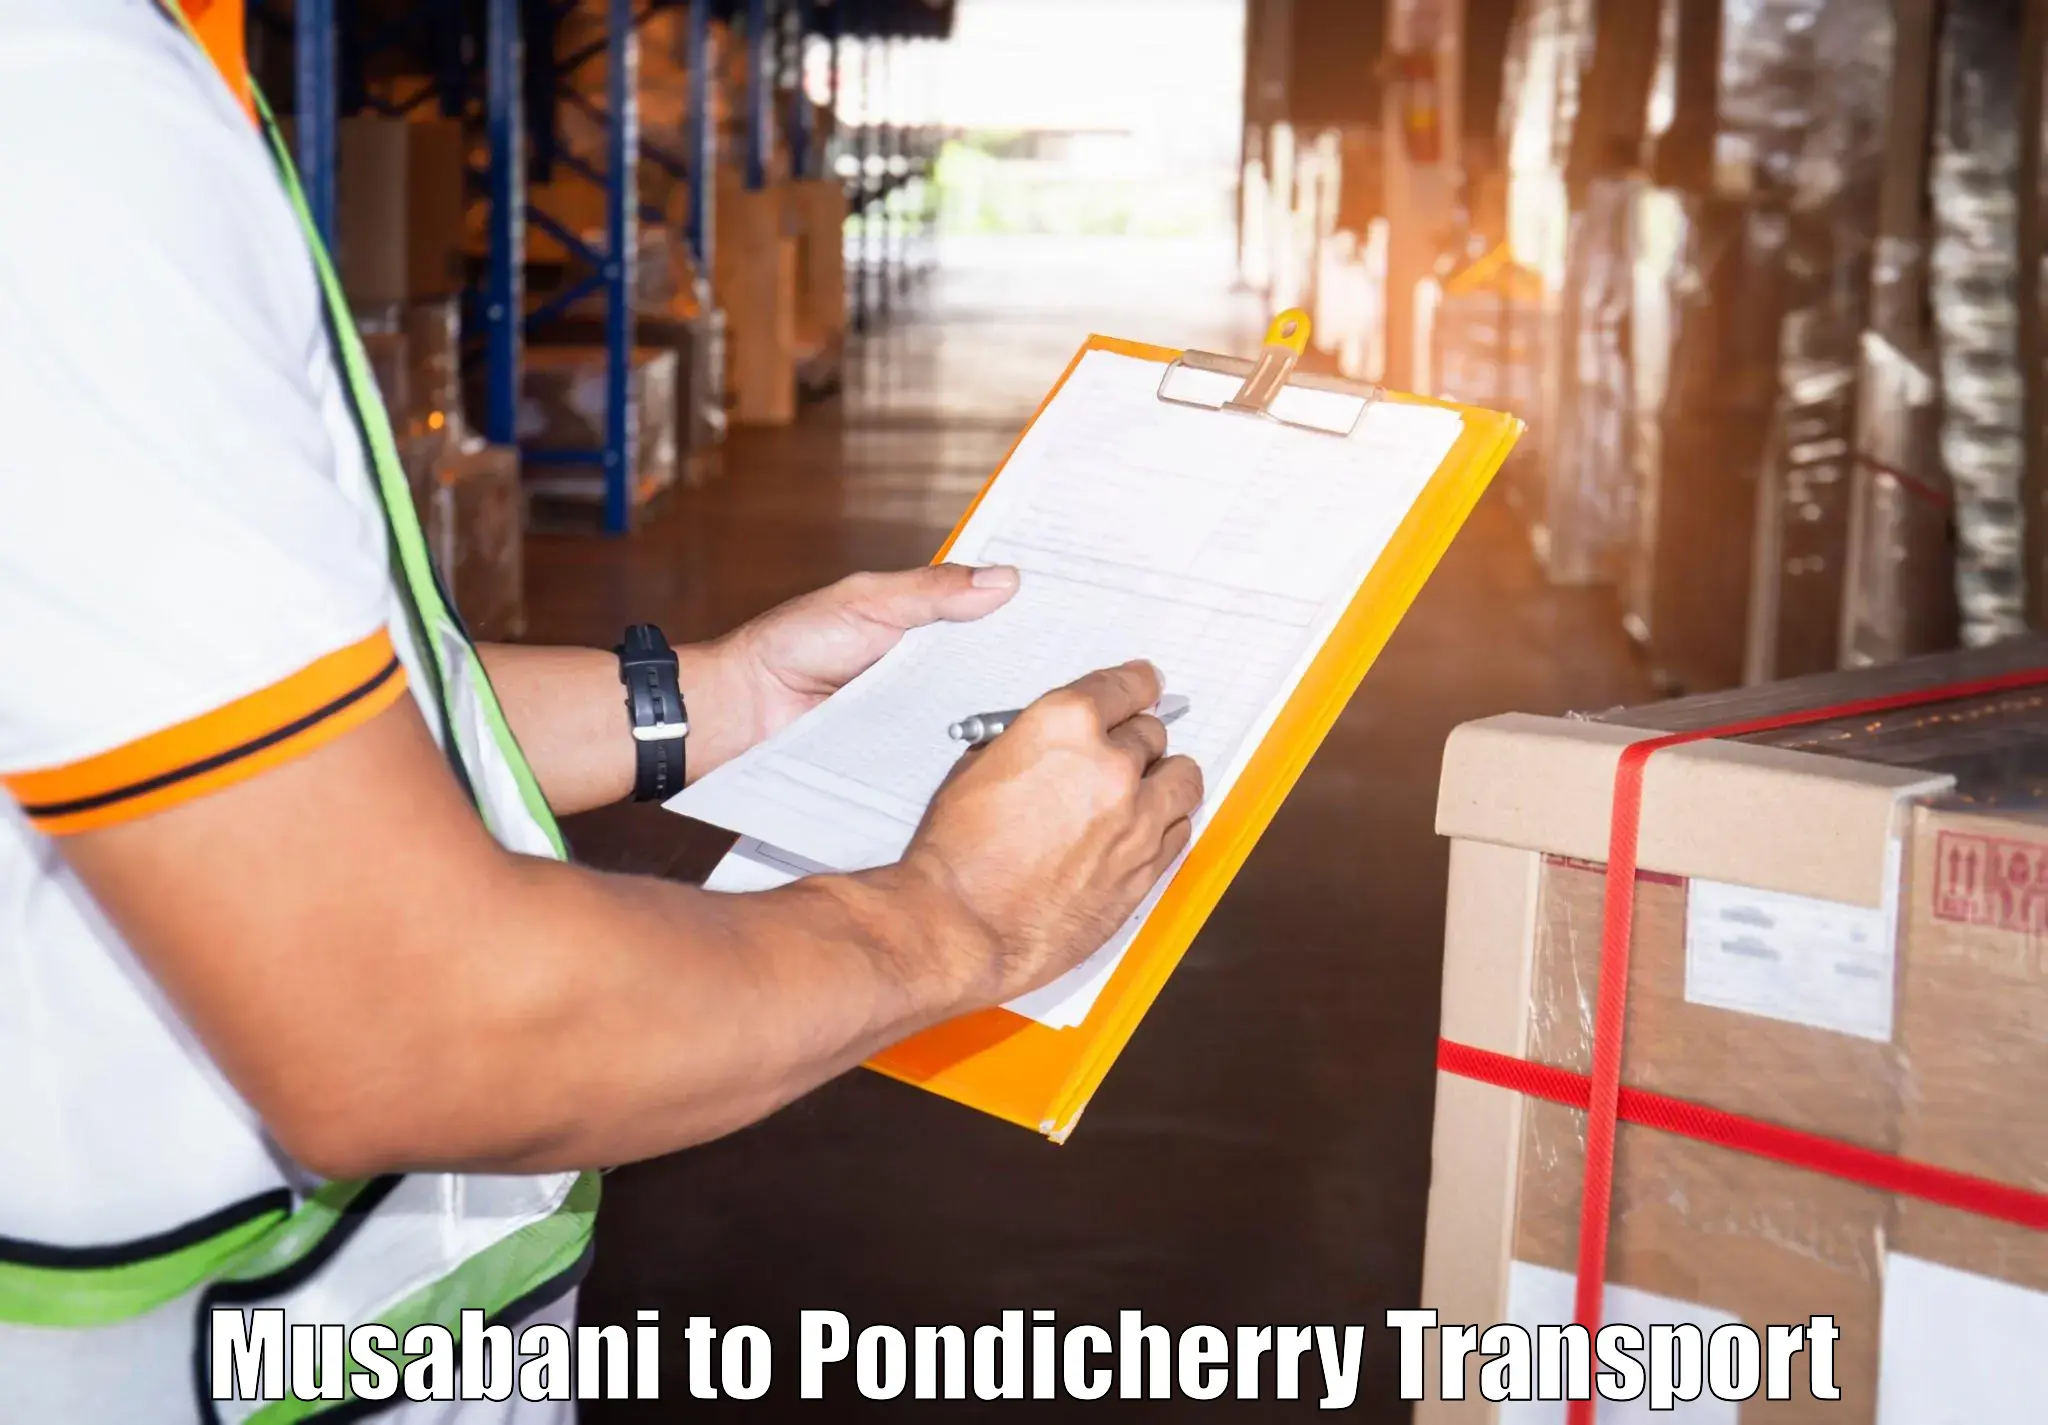 Commercial transport service Musabani to Pondicherry University